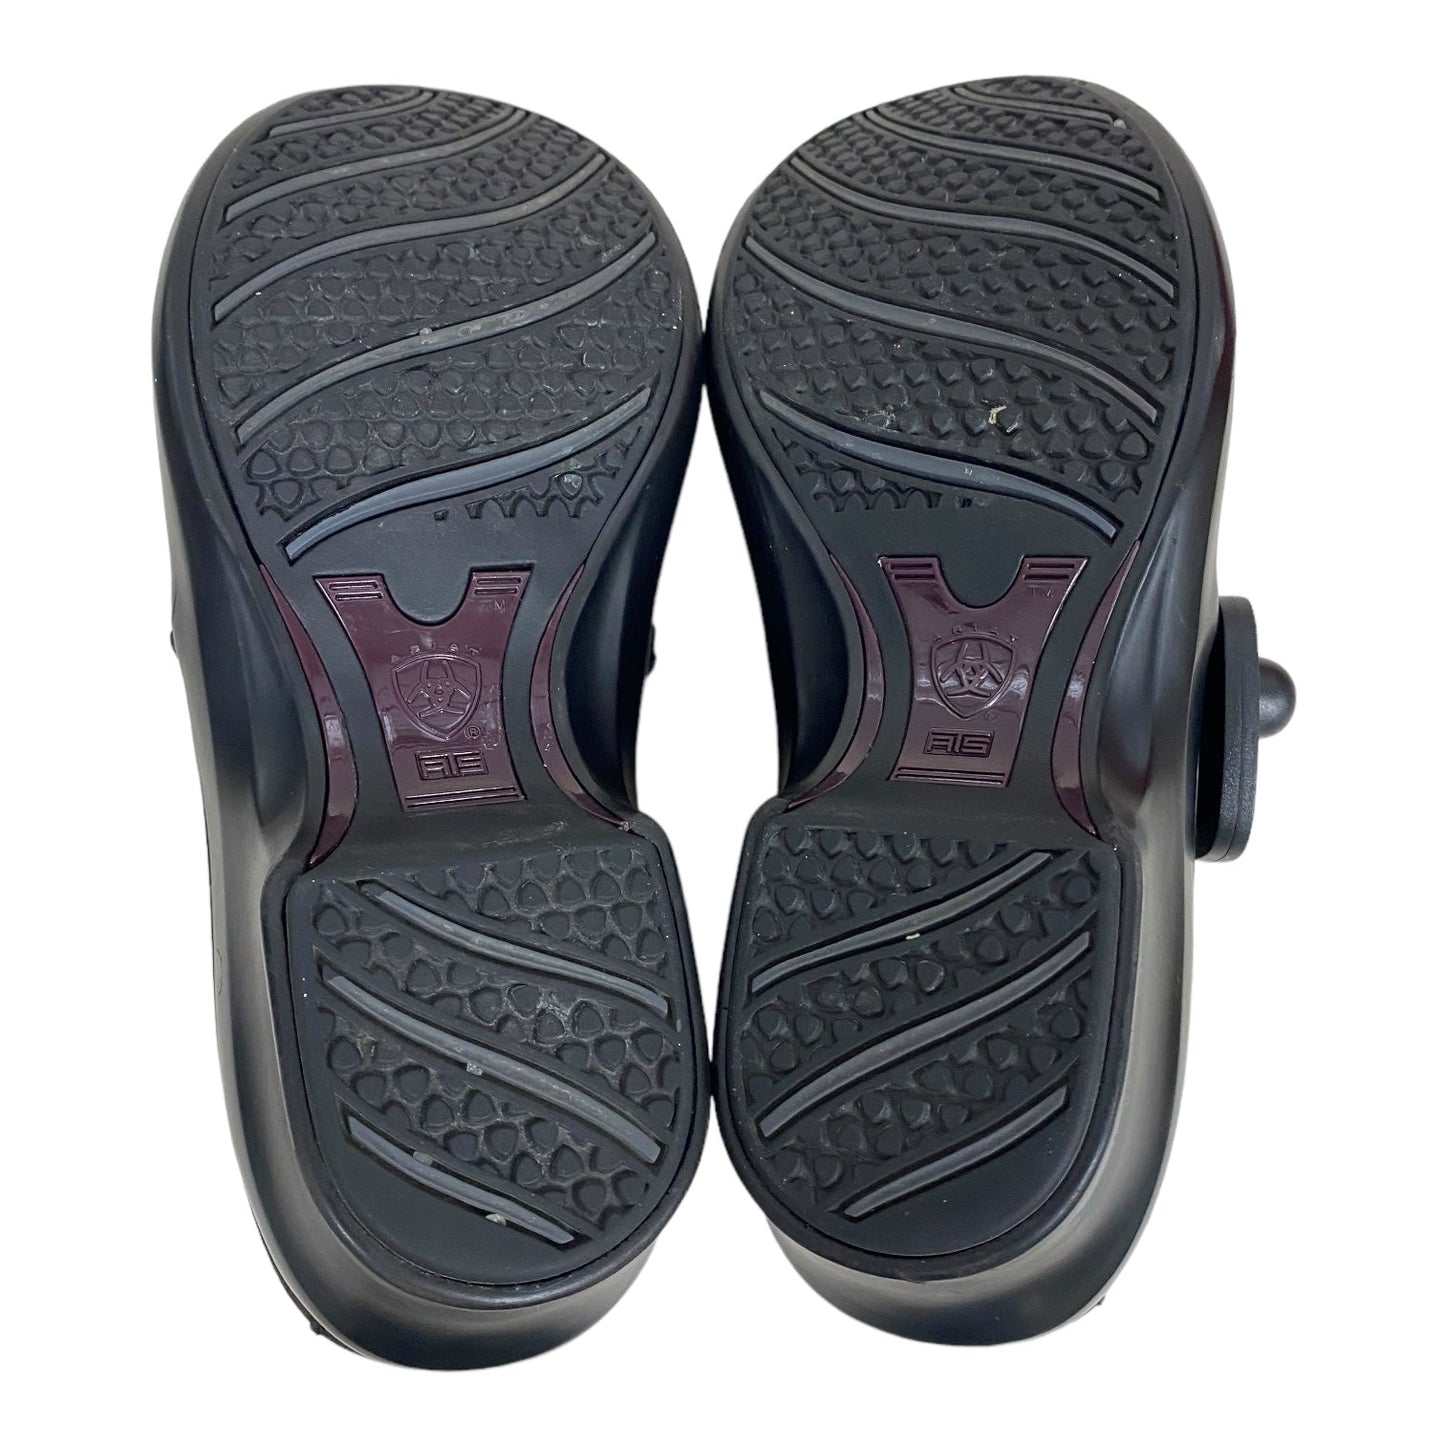 Black Shoes Heels Block Ariat, Size 6.5